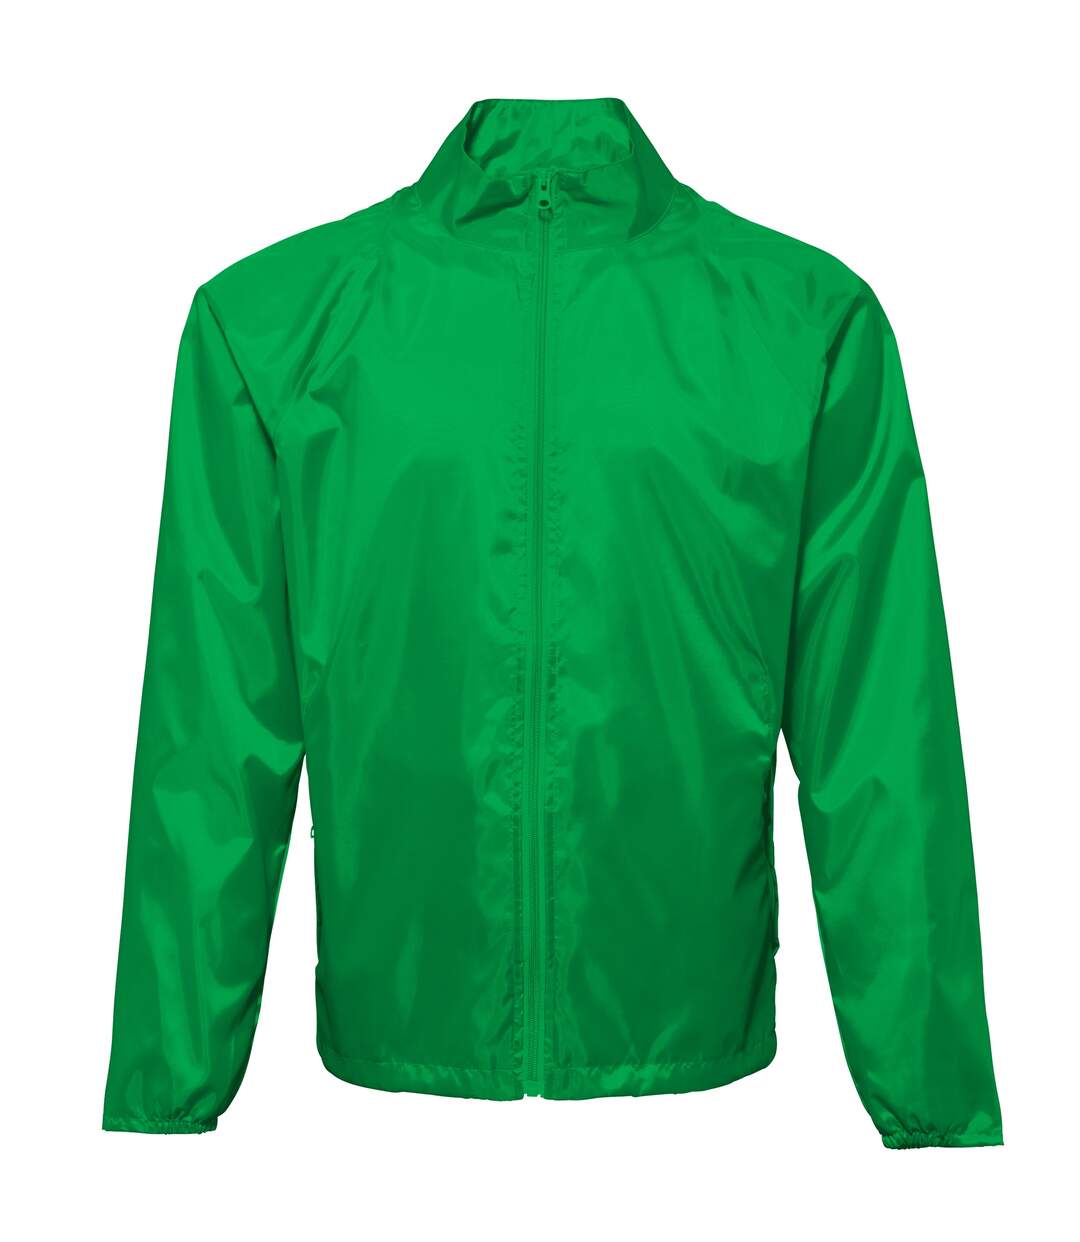 2786 Unisex Lightweight Plain Wind & Shower Resistant Jacket (Kelly)